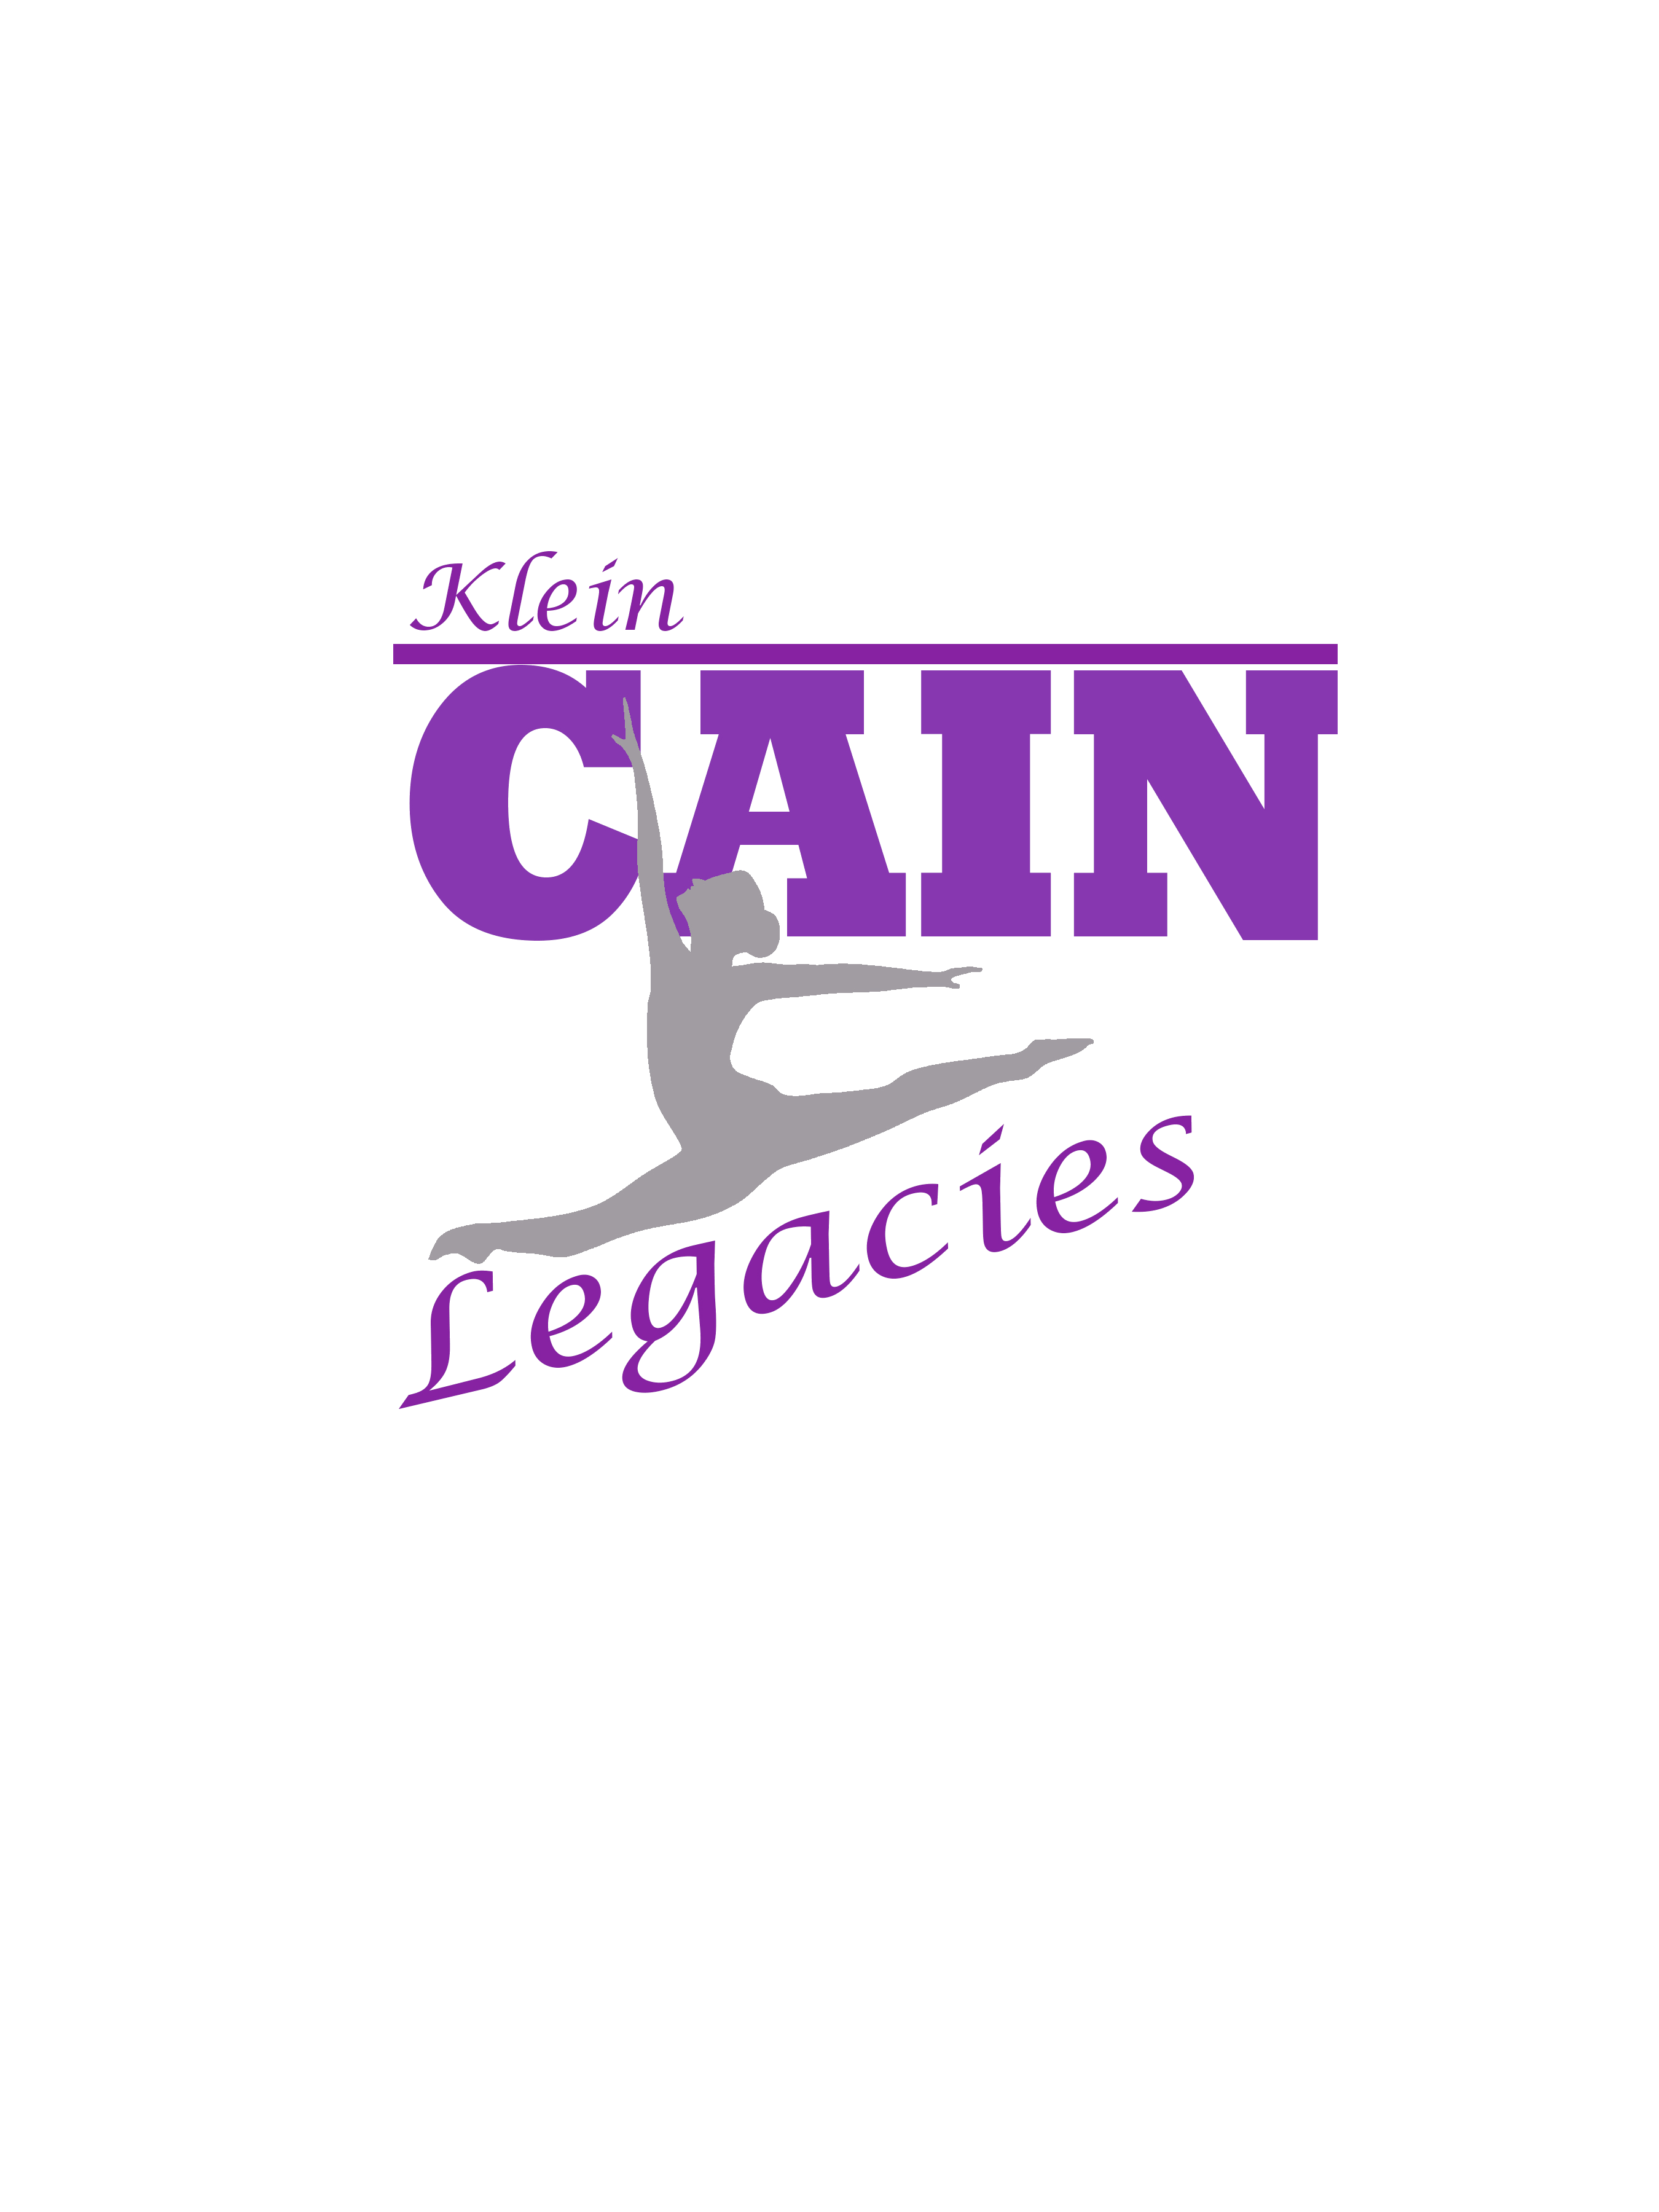 Klein Cain Legacies logo